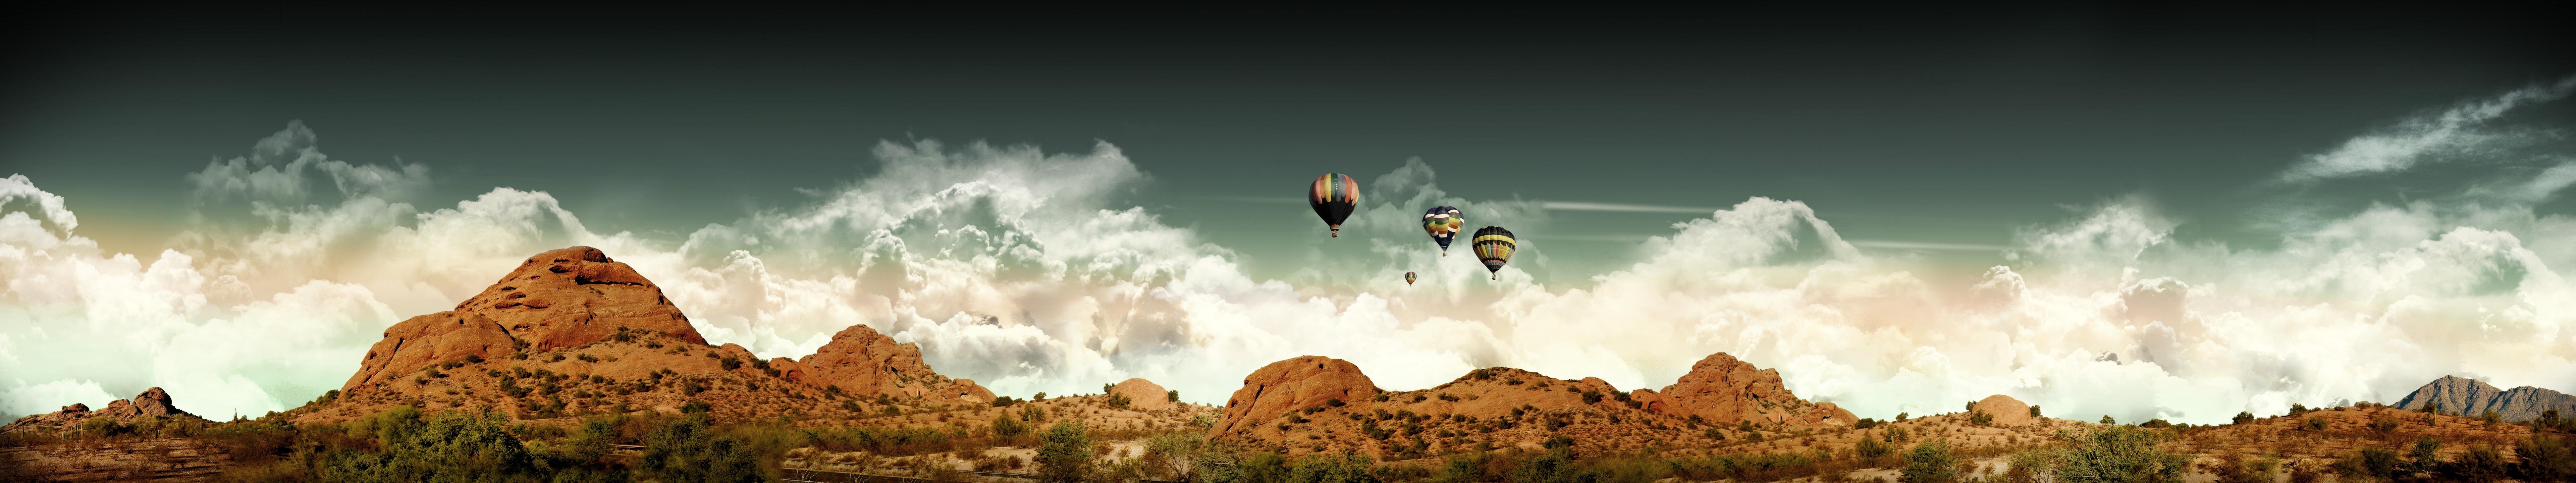 mountains, Hot air balloons Wallpaper